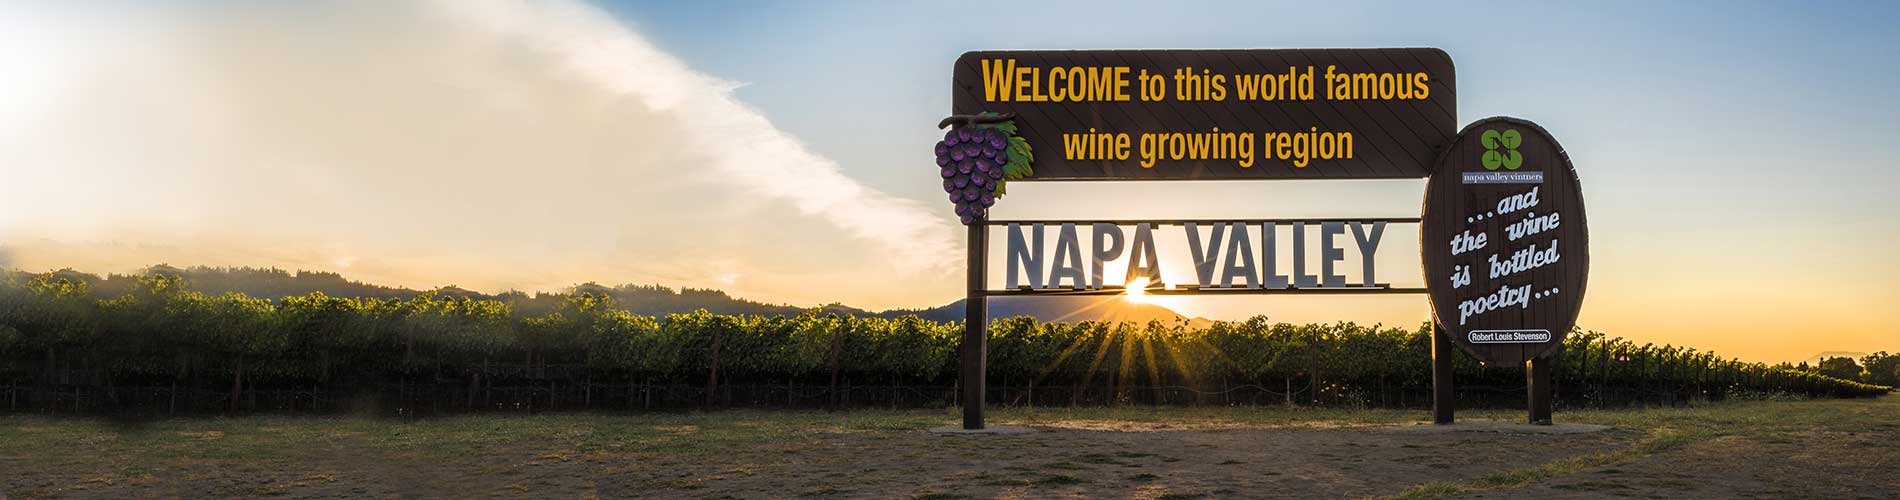 Napa valley sign